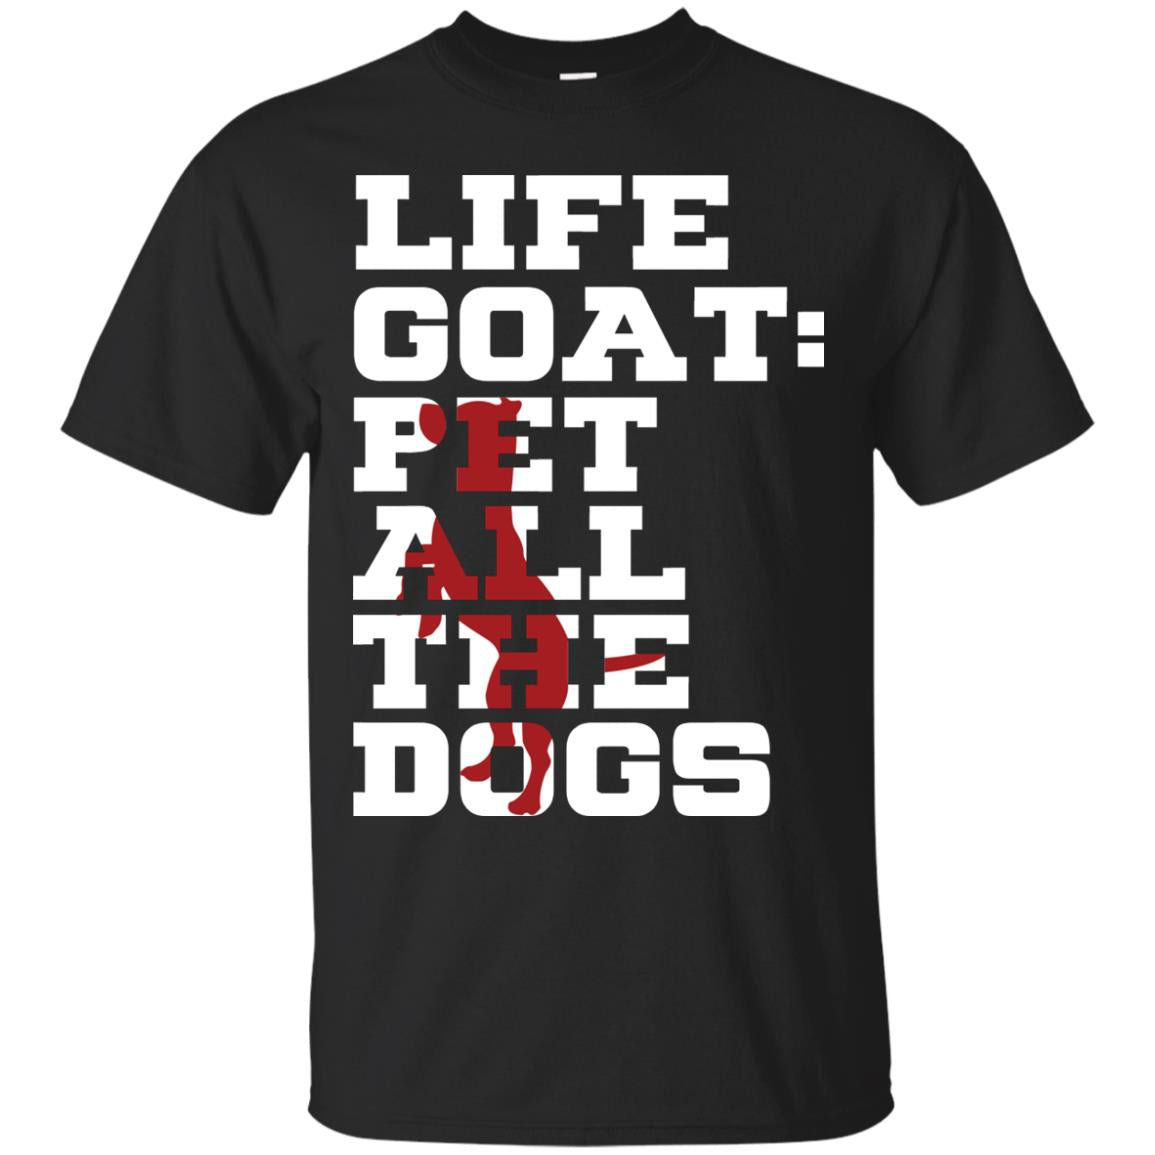 Life Goal Pet All The Dogs Shirt For Dogs LoverG200 Gildan Ultra Cotton T-Shirt